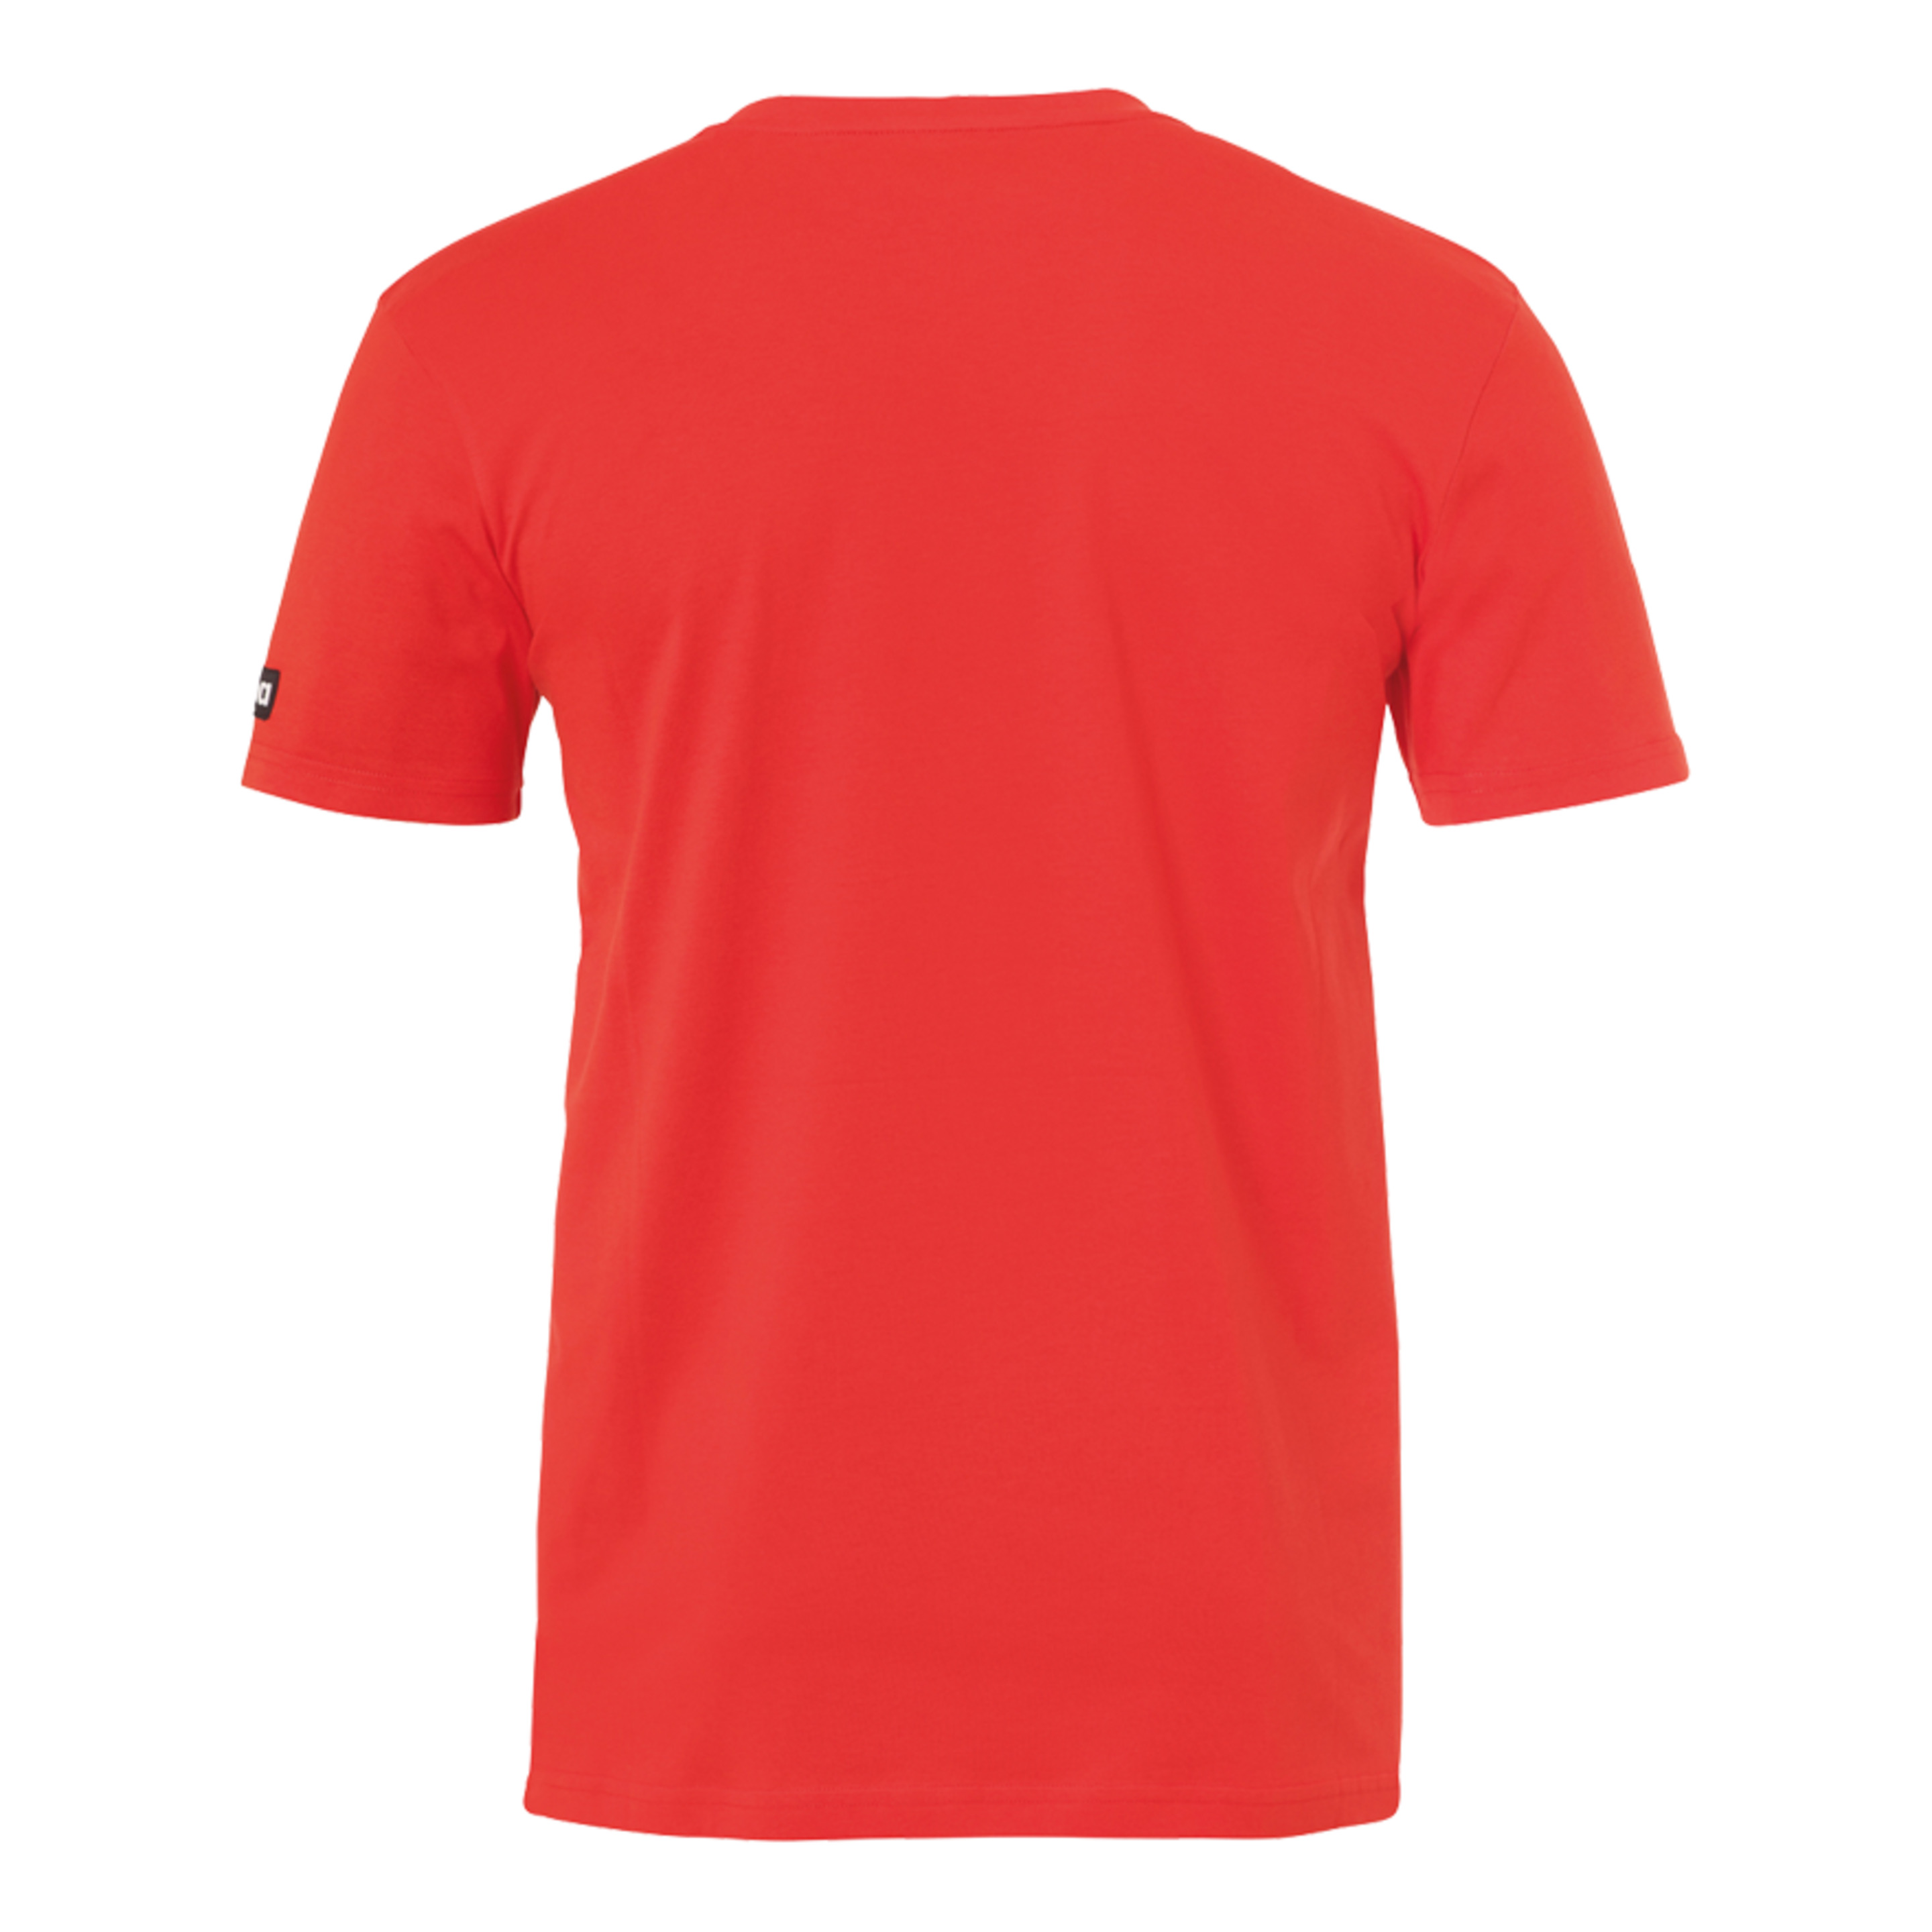 Promo Camiseta Rojo Kempa